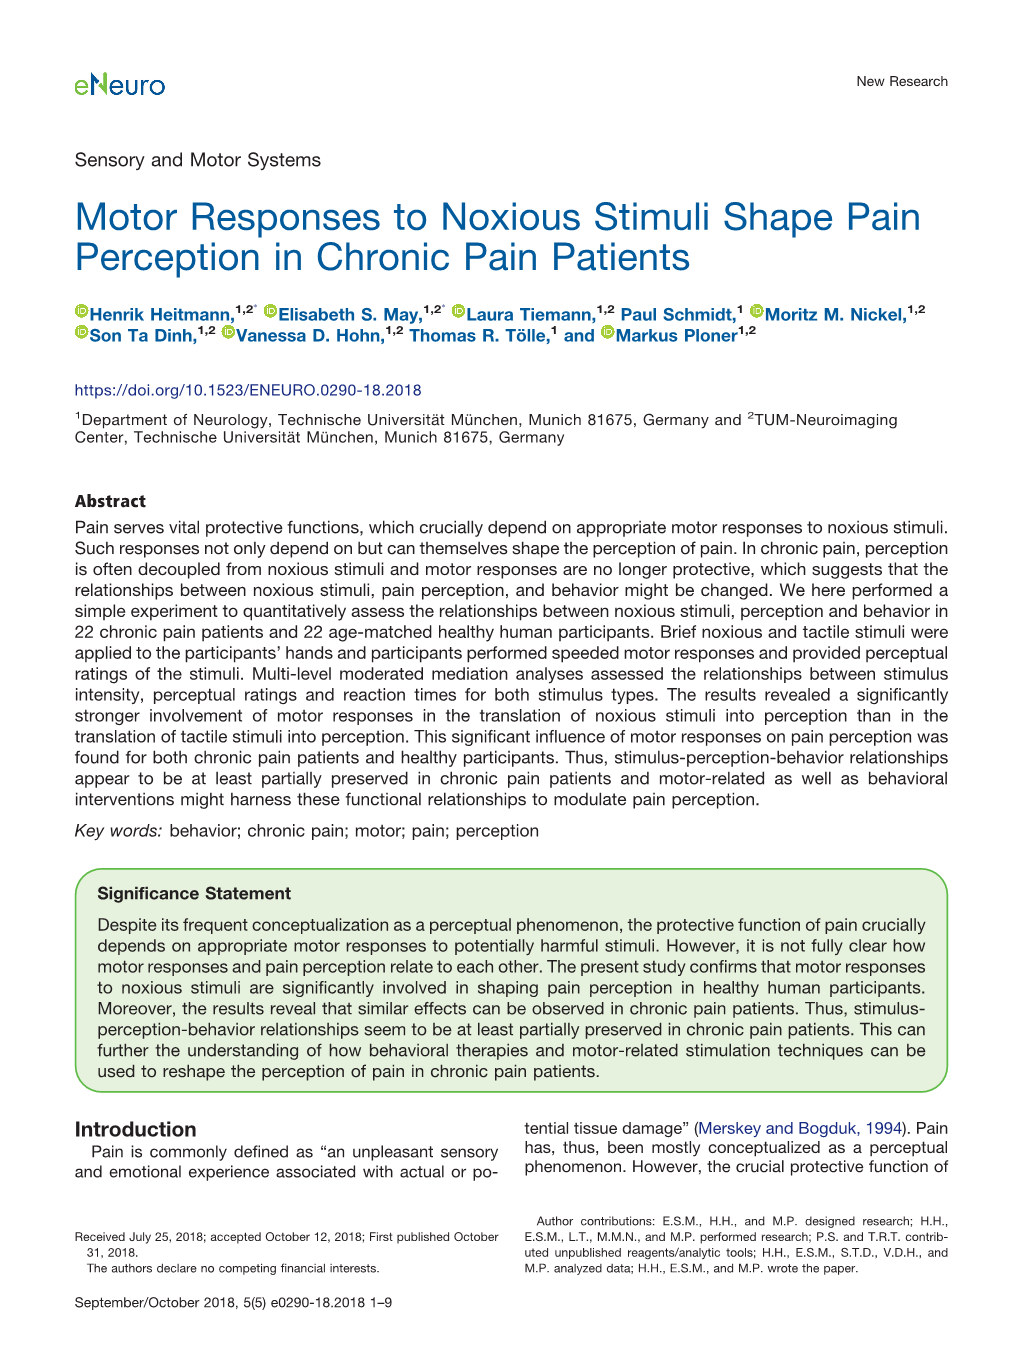 Motor Responses to Noxious Stimuli Shape Pain Perception in Chronic Pain Patients